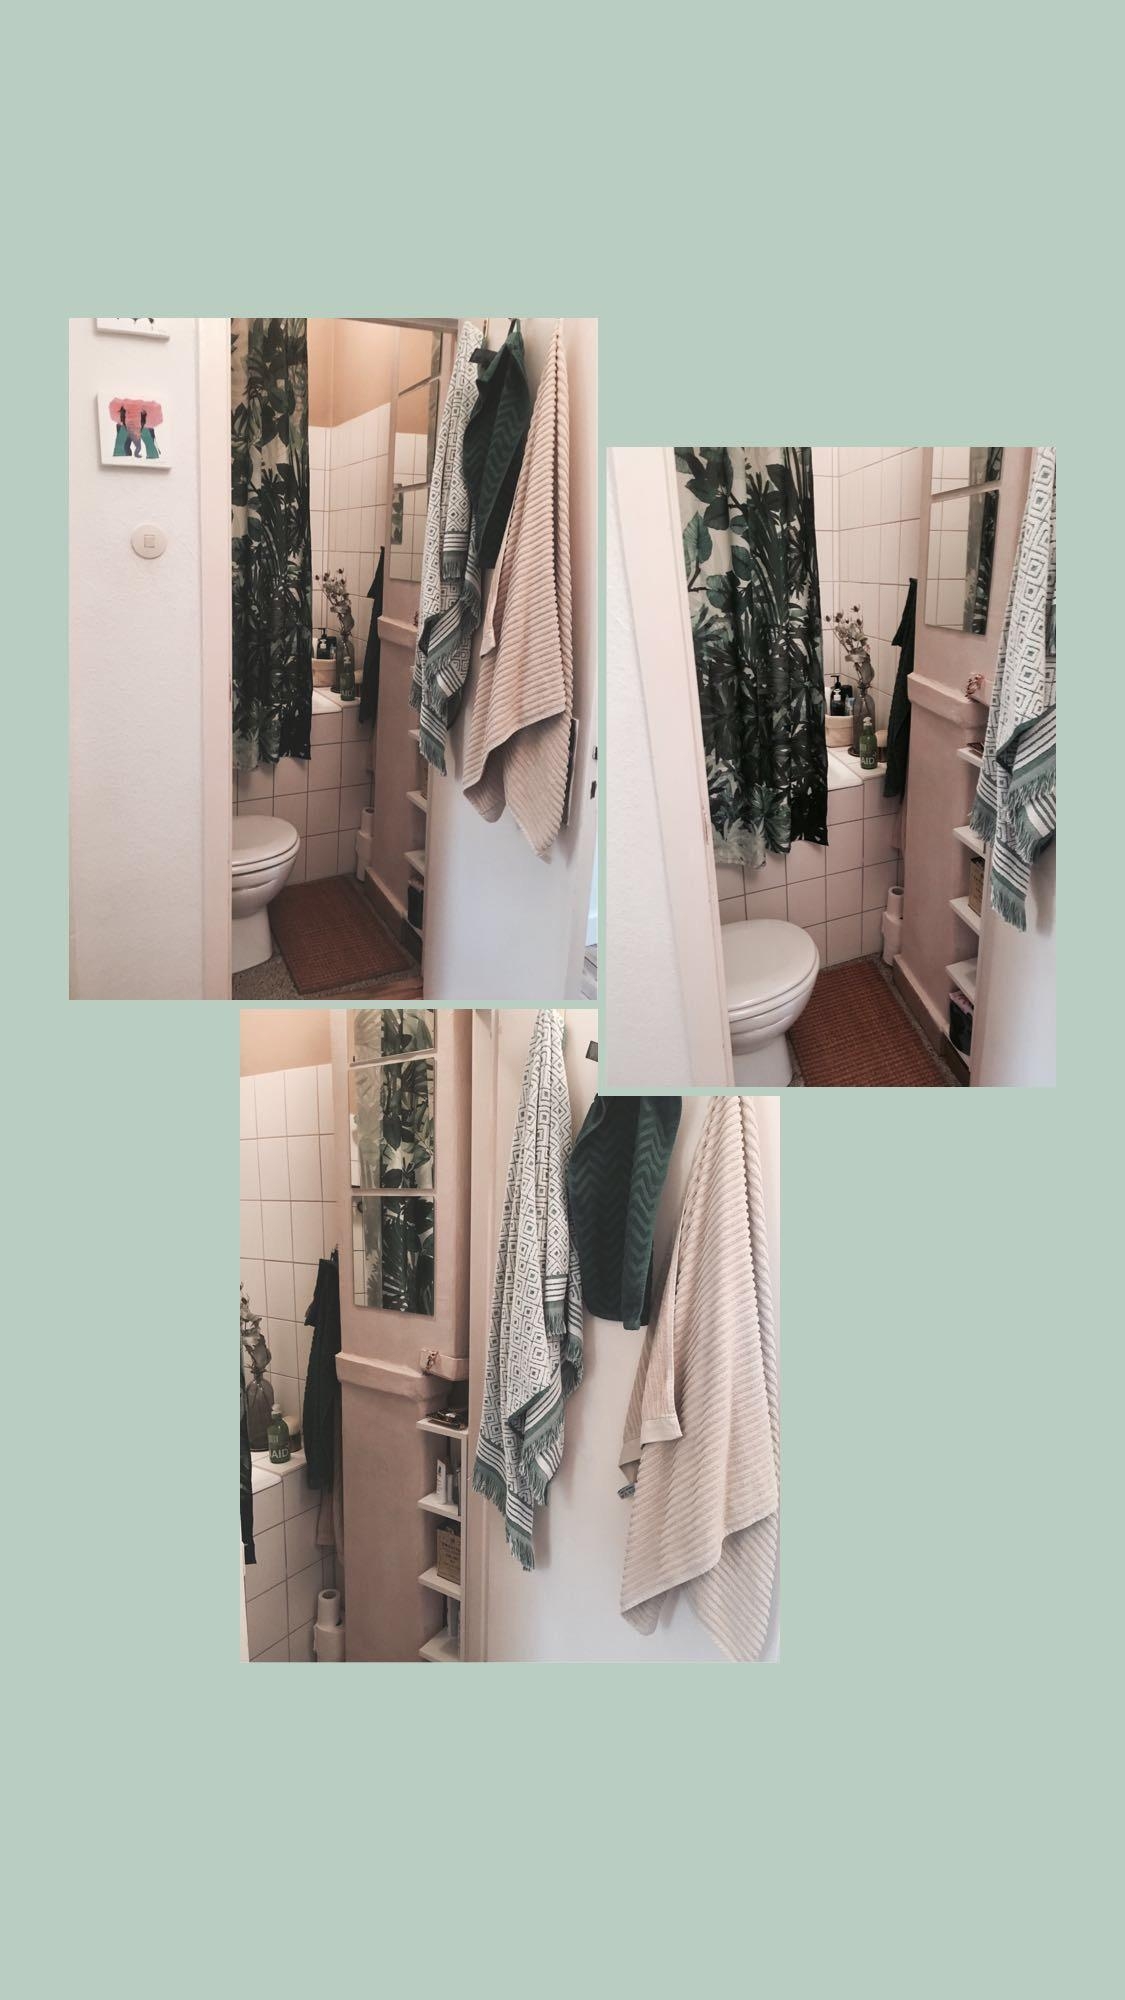 Mini Mini Mini Badezimmer 🌴
#minibadezimmer #tinyone #bathroom #greenparadise #couchstyle #interior #ca1m2